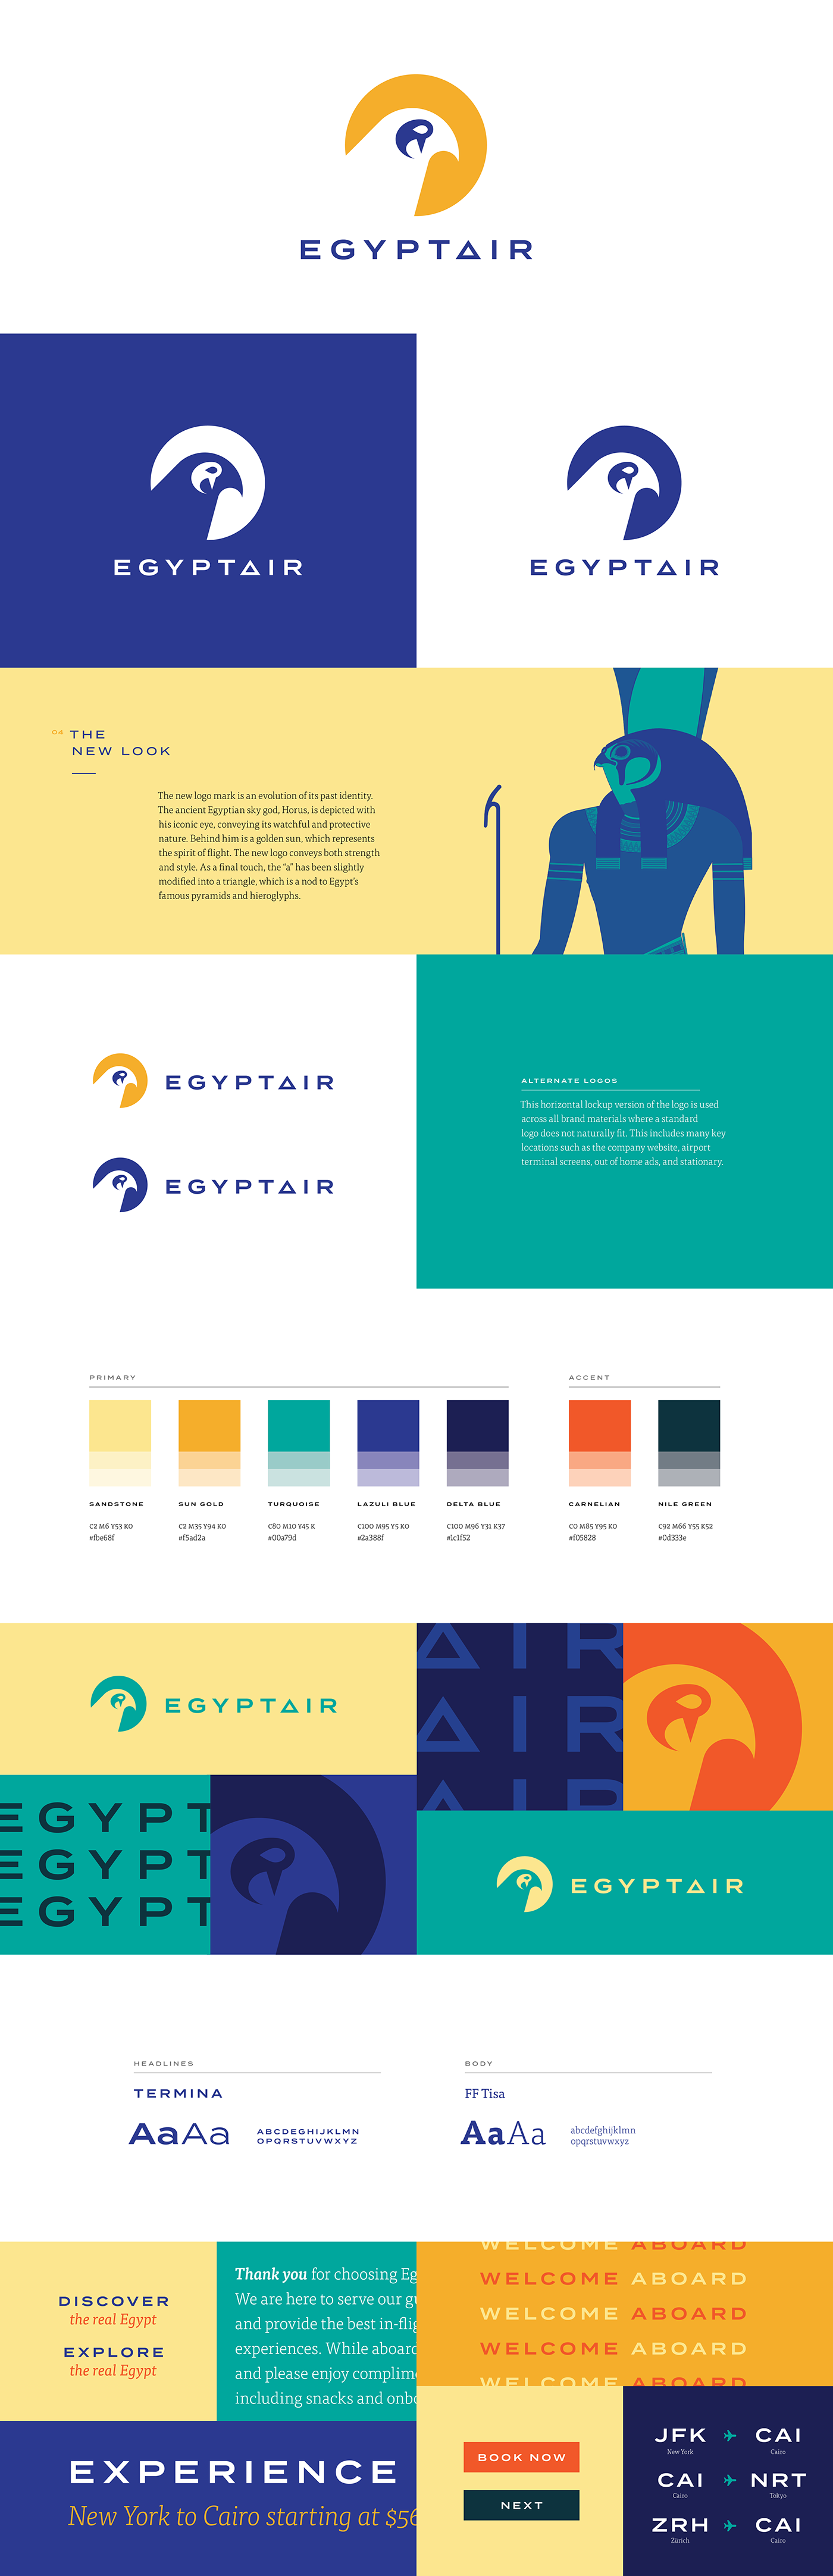 airline Egyptair egypt branding  Rebrand commercial plane graphic design  middle east